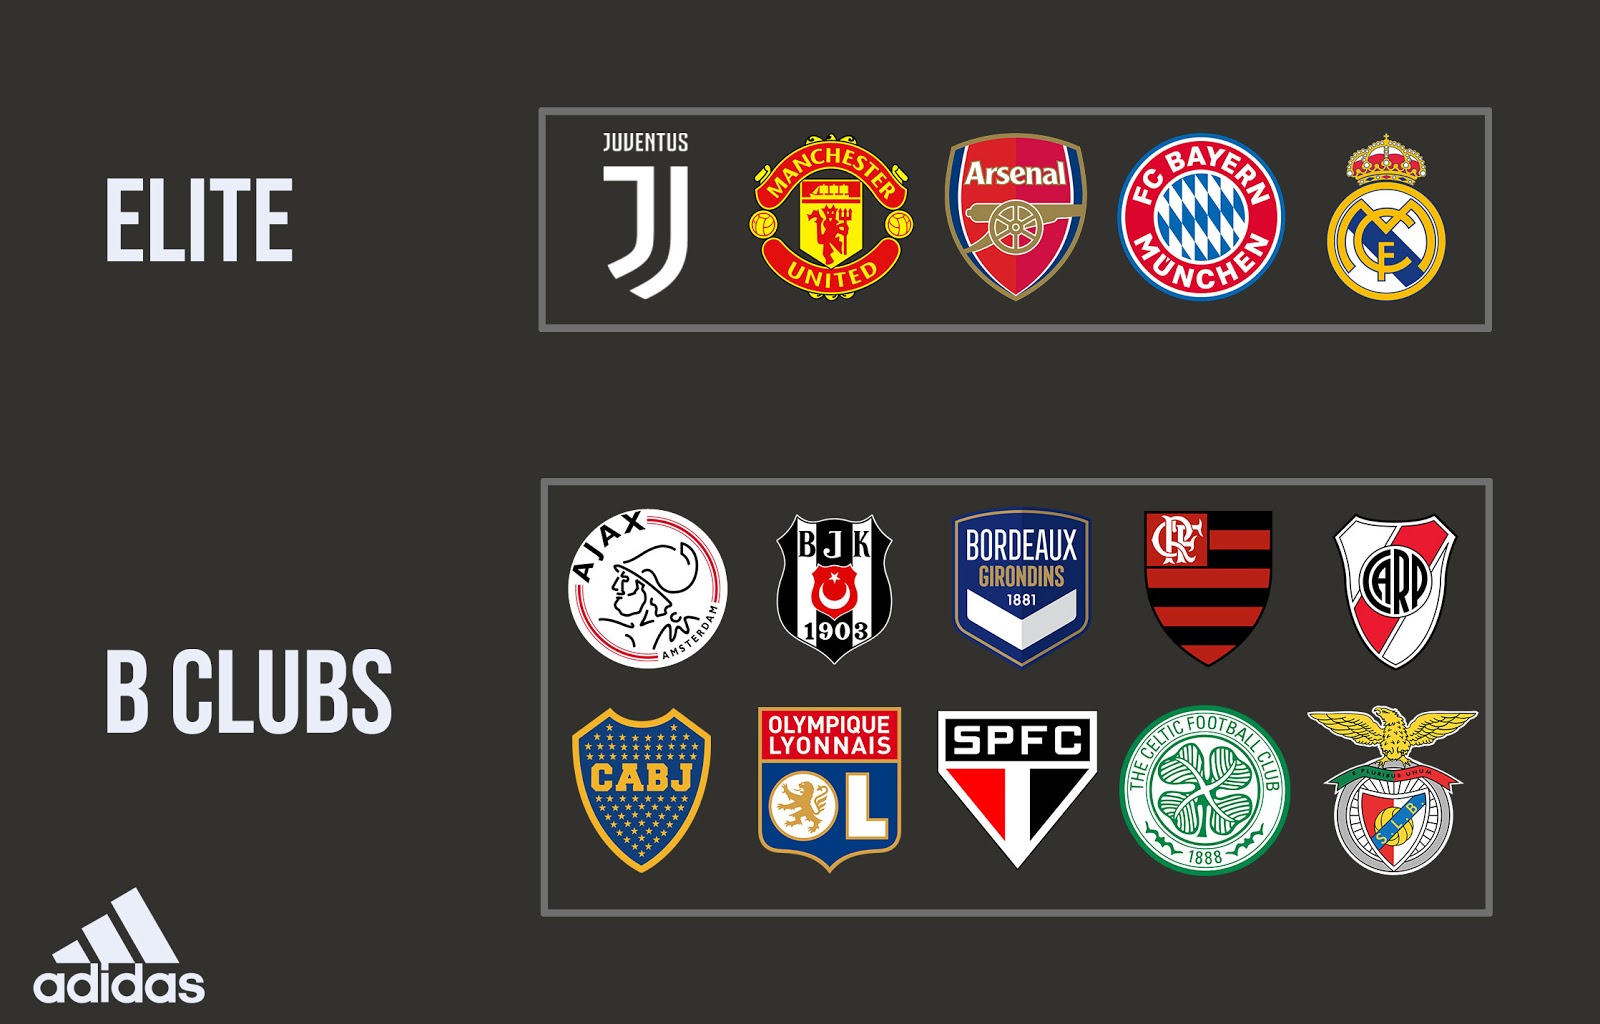 Adidas Football Sponsorships - "All" B Teams & Premium Clubs Of German Brand - Footy Headlines